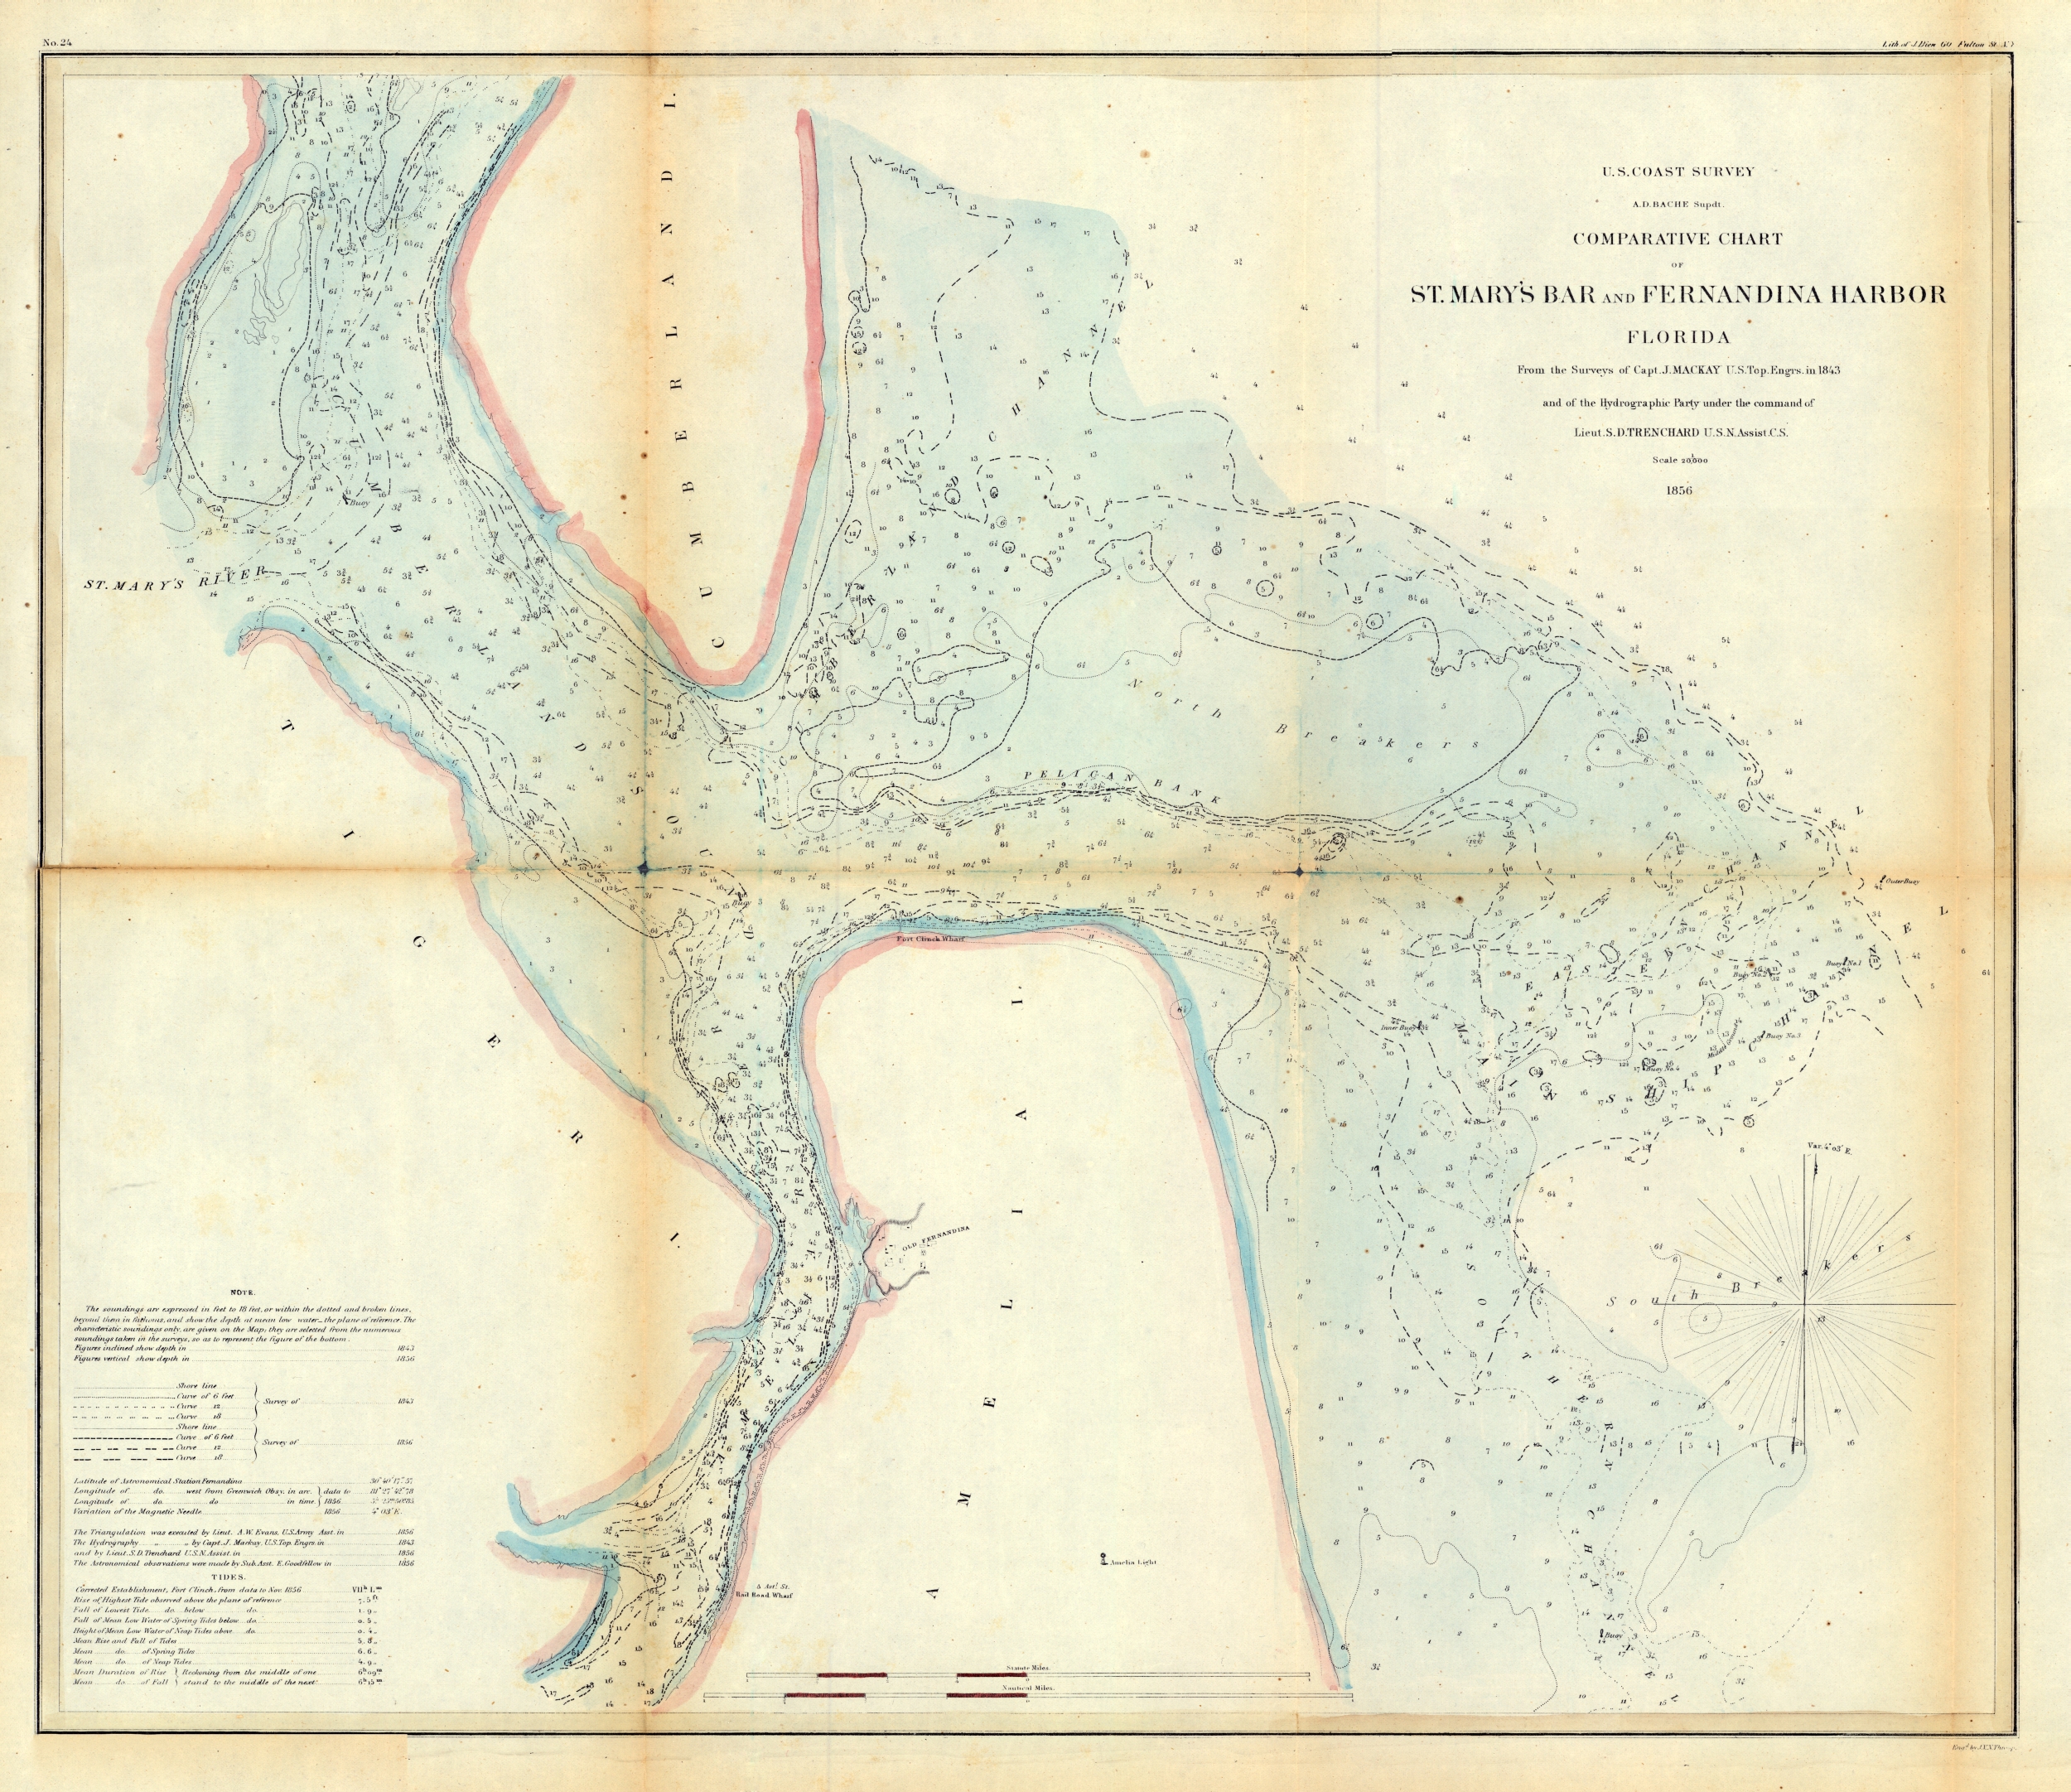 St. Mary's Bar and Fernandina Harbor Nautical Chart, 1856